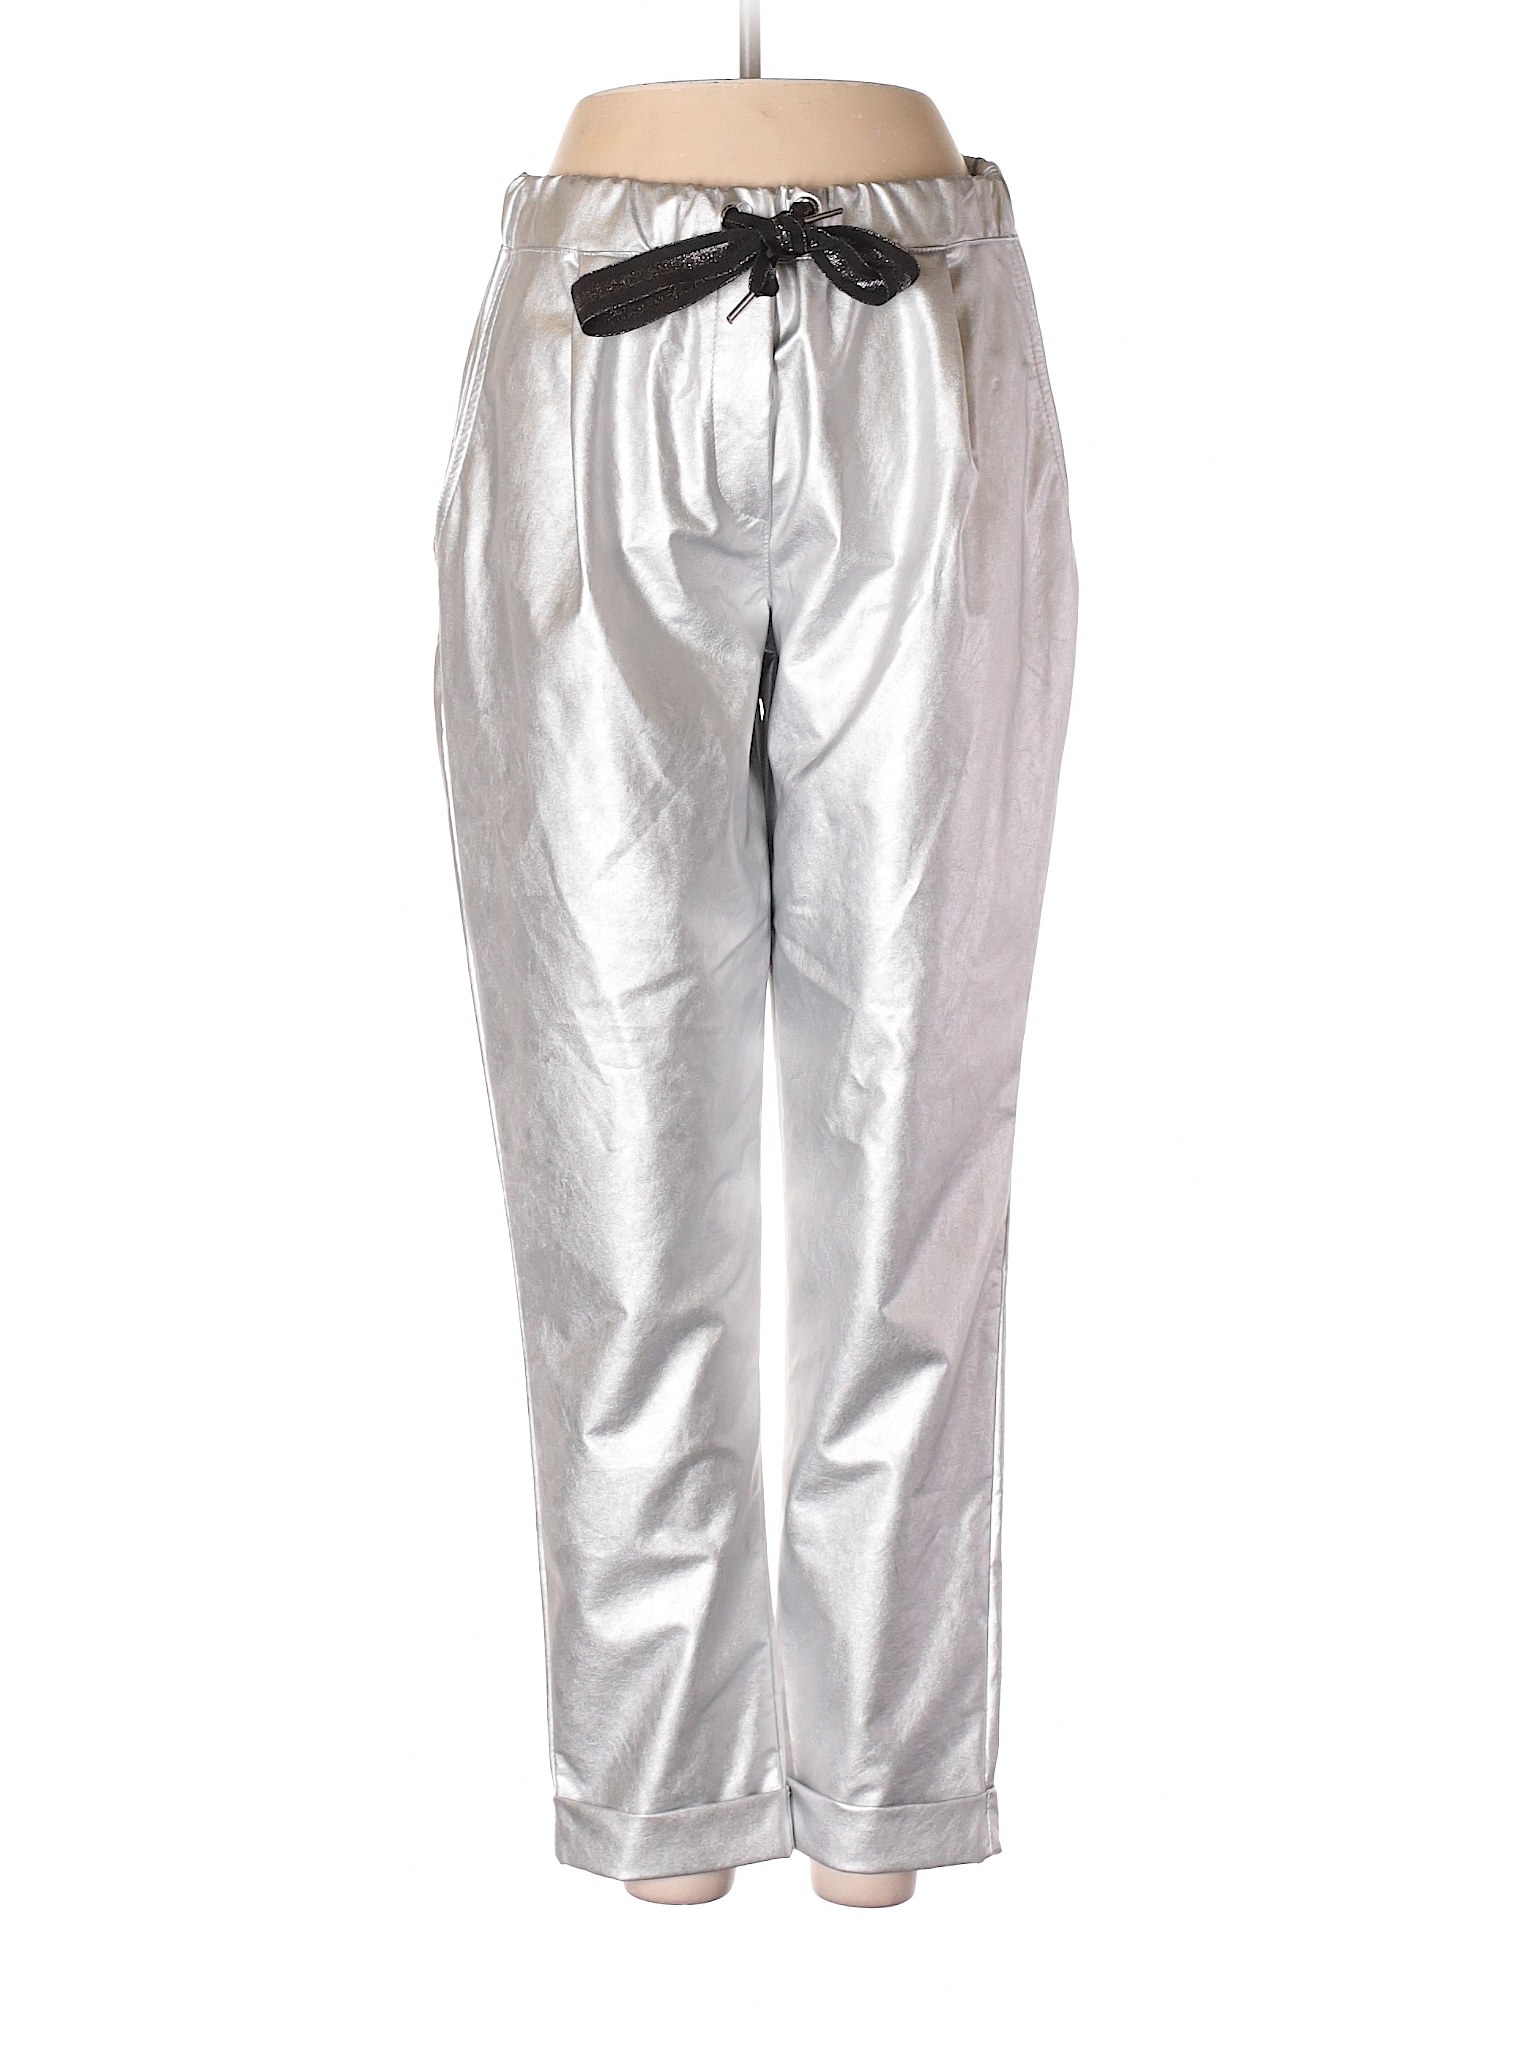 Bebe Metallic Silver Faux Leather Pants Size M - 97% off | thredUP